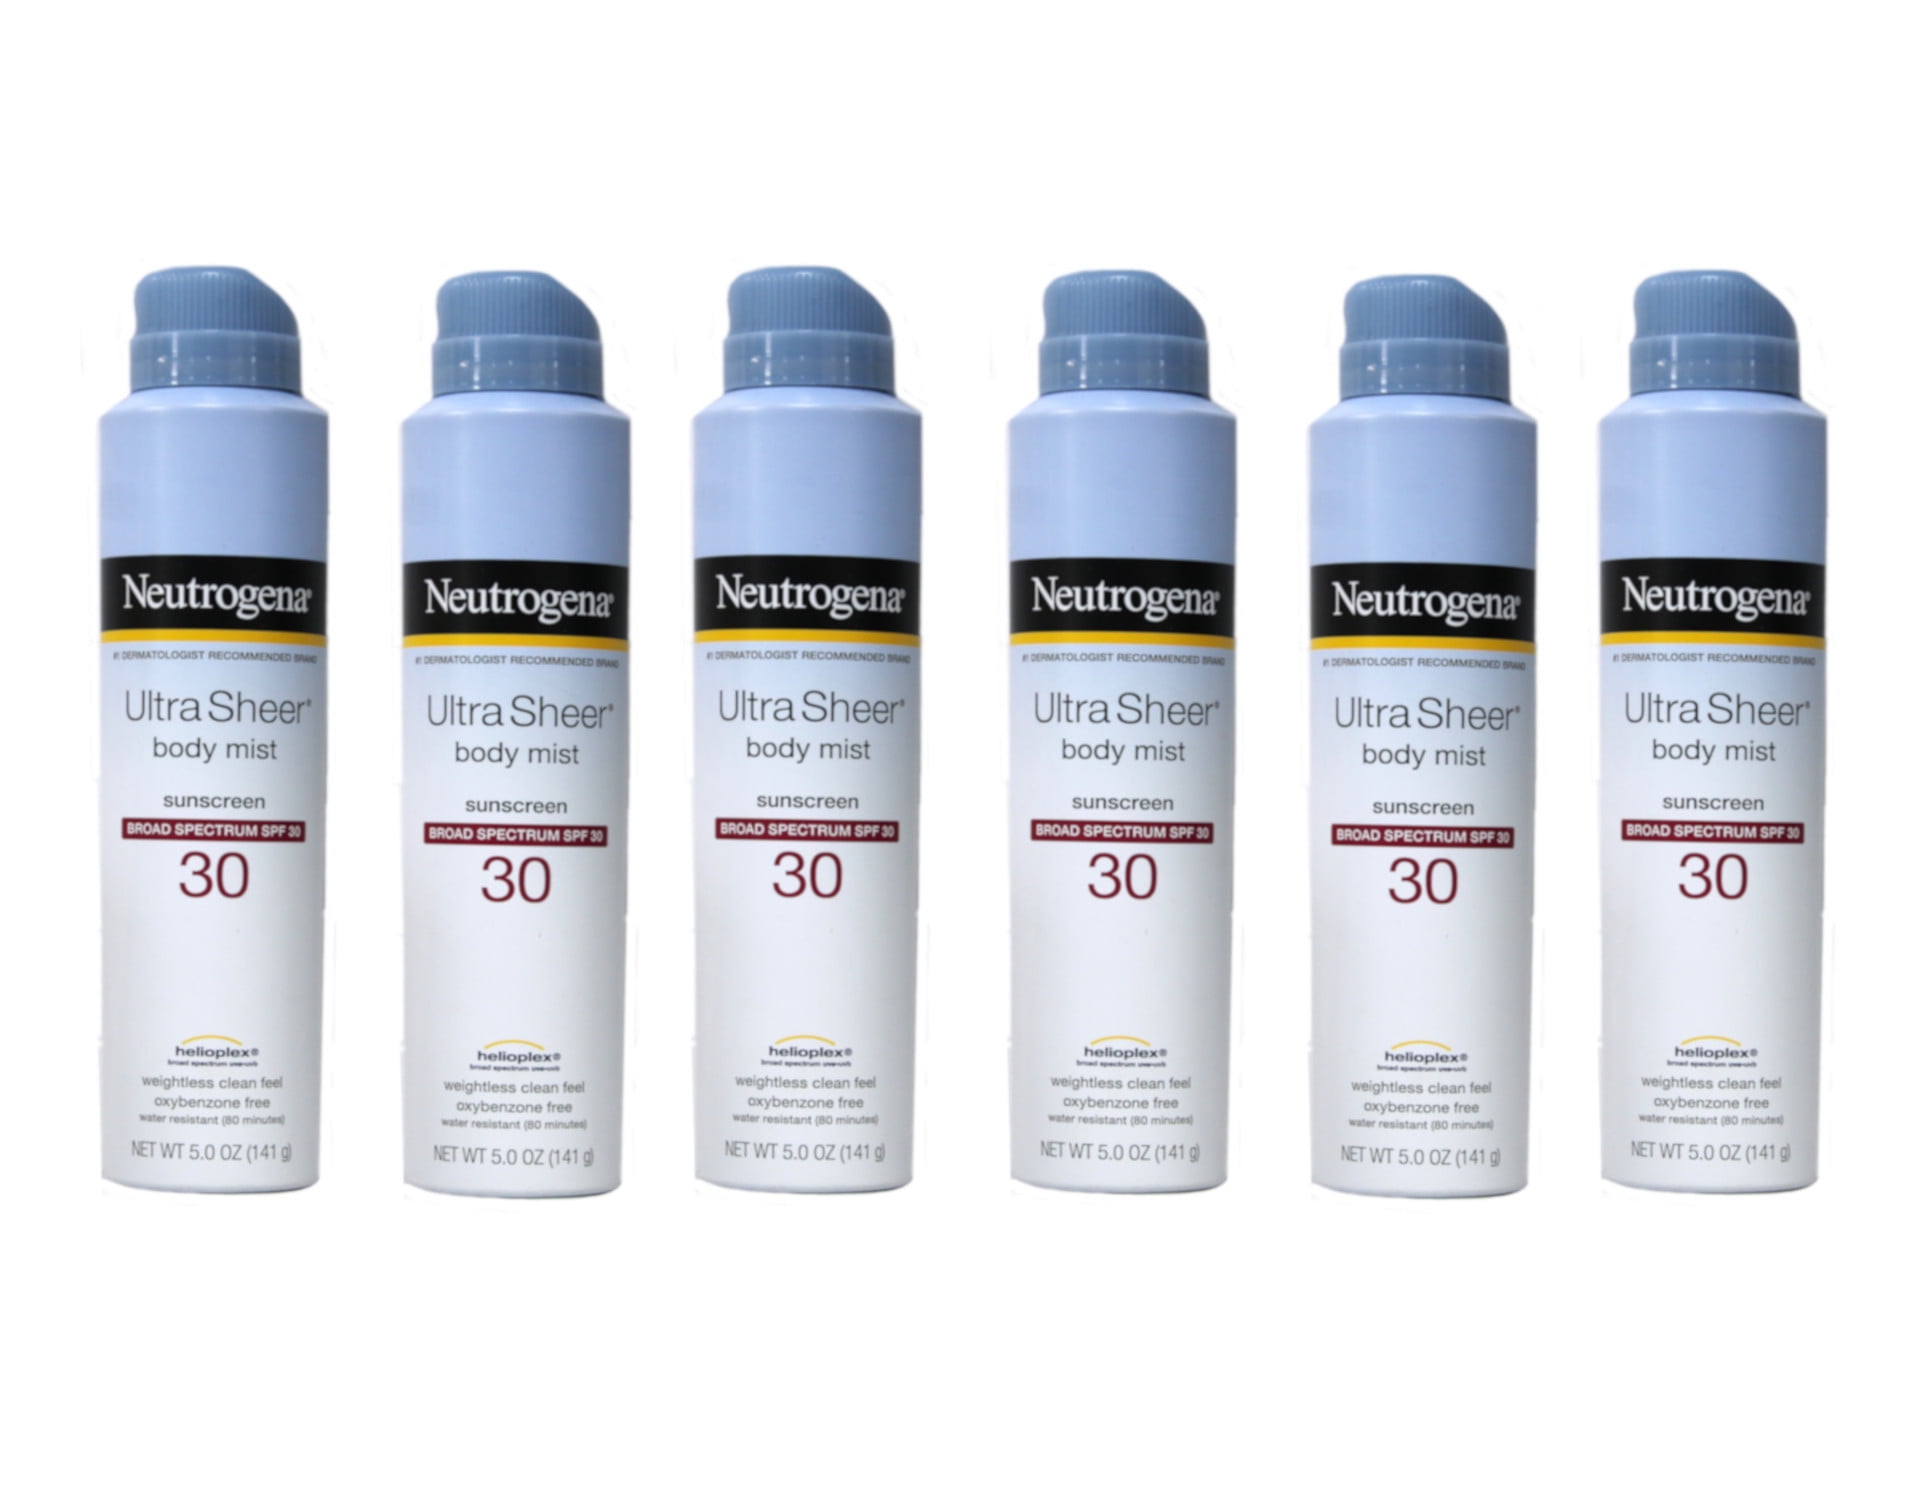 Neutrogena Ultra Sheer Body Mist Full Reach Sunscreen Spray, SPF 30, 5 oz (Pack of 6)